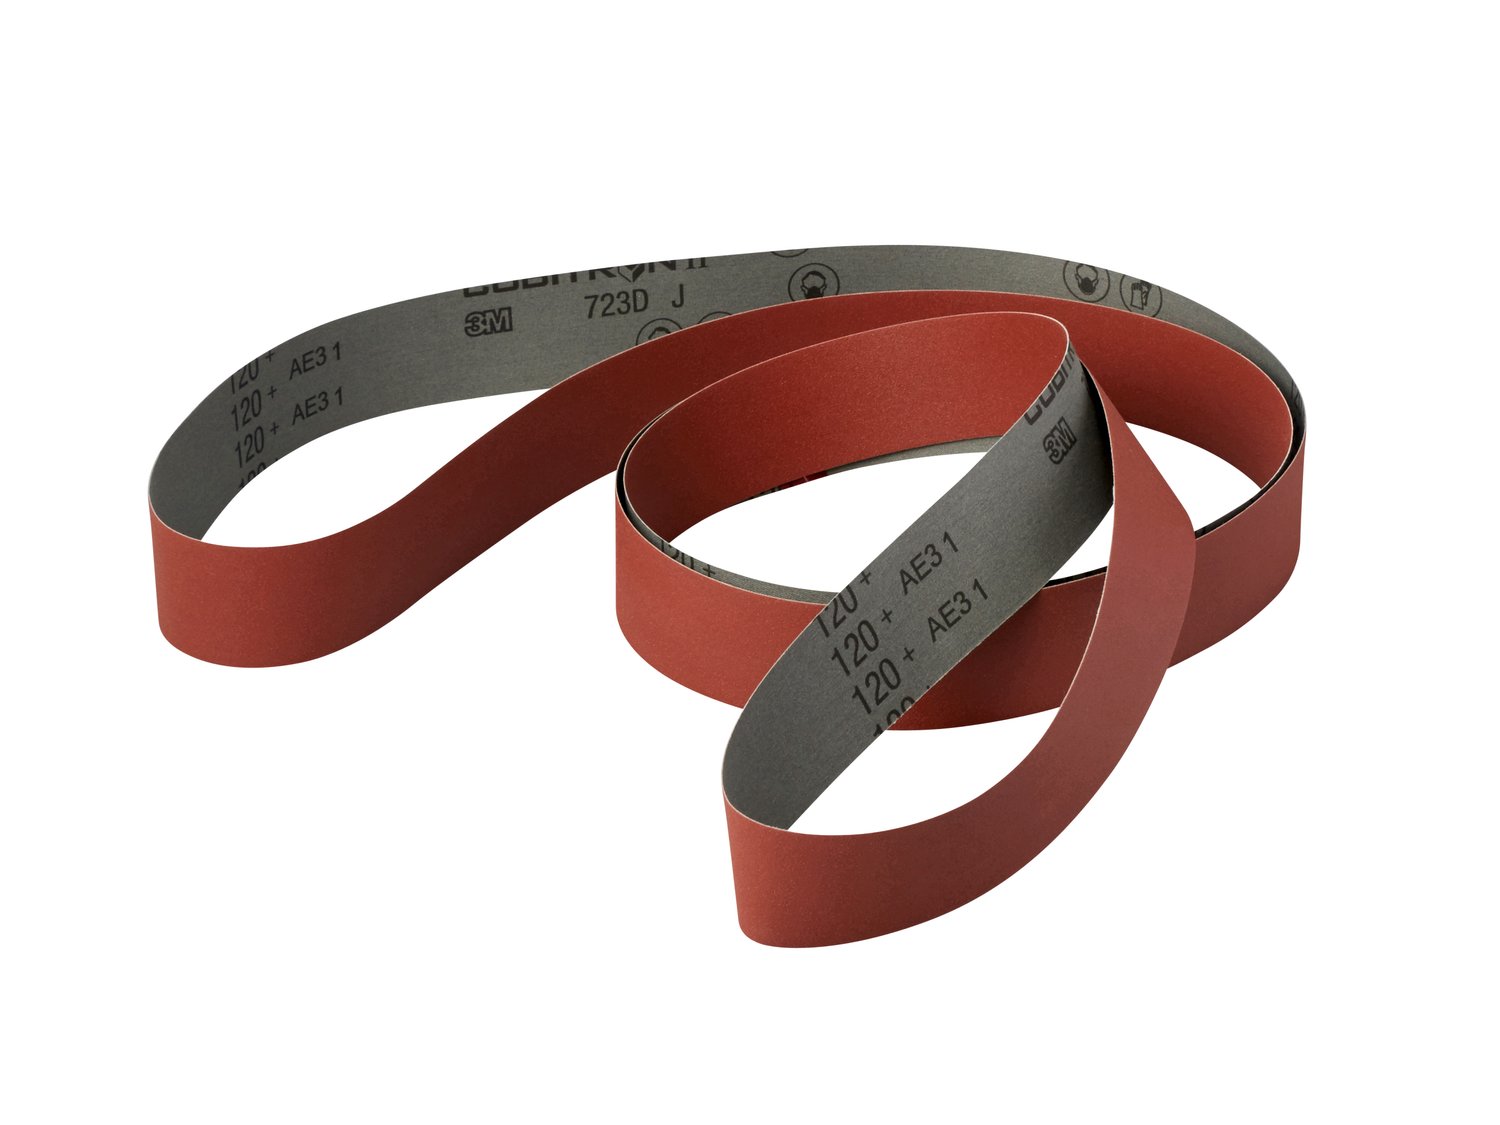 7010516352 - 3M Cubitron ll Cloth Belt 723D, 180+ J-weight, 3 in x 118 in,
Film-lok, Full-flex